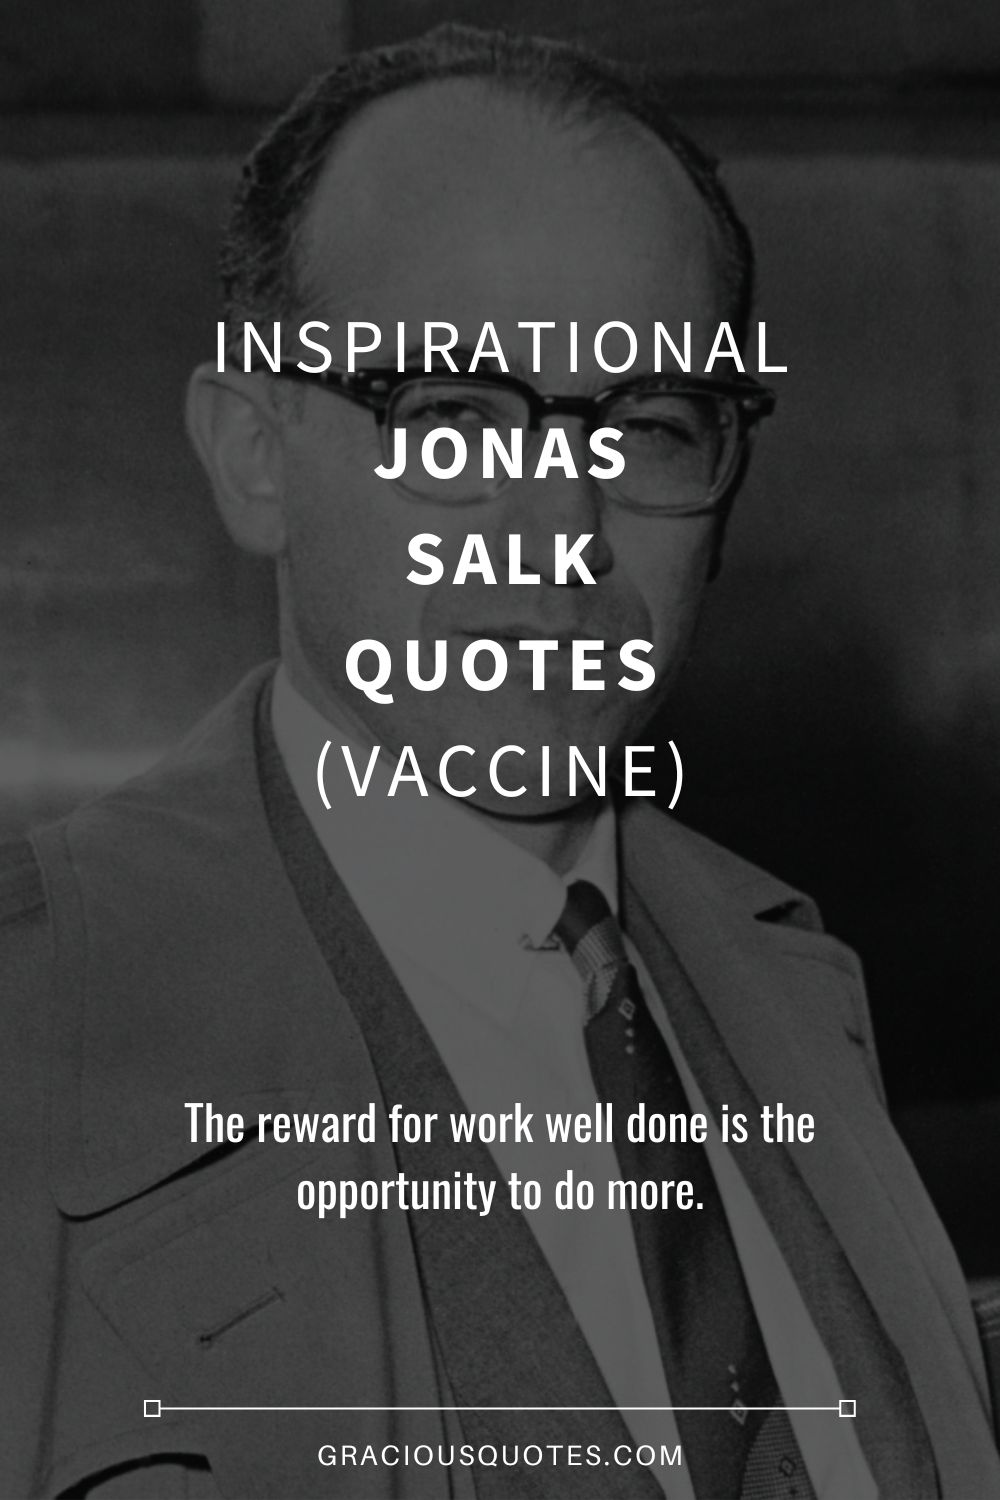 Inspirational Jonas Salk Quotes (VACCINE) - Gracious Quotes